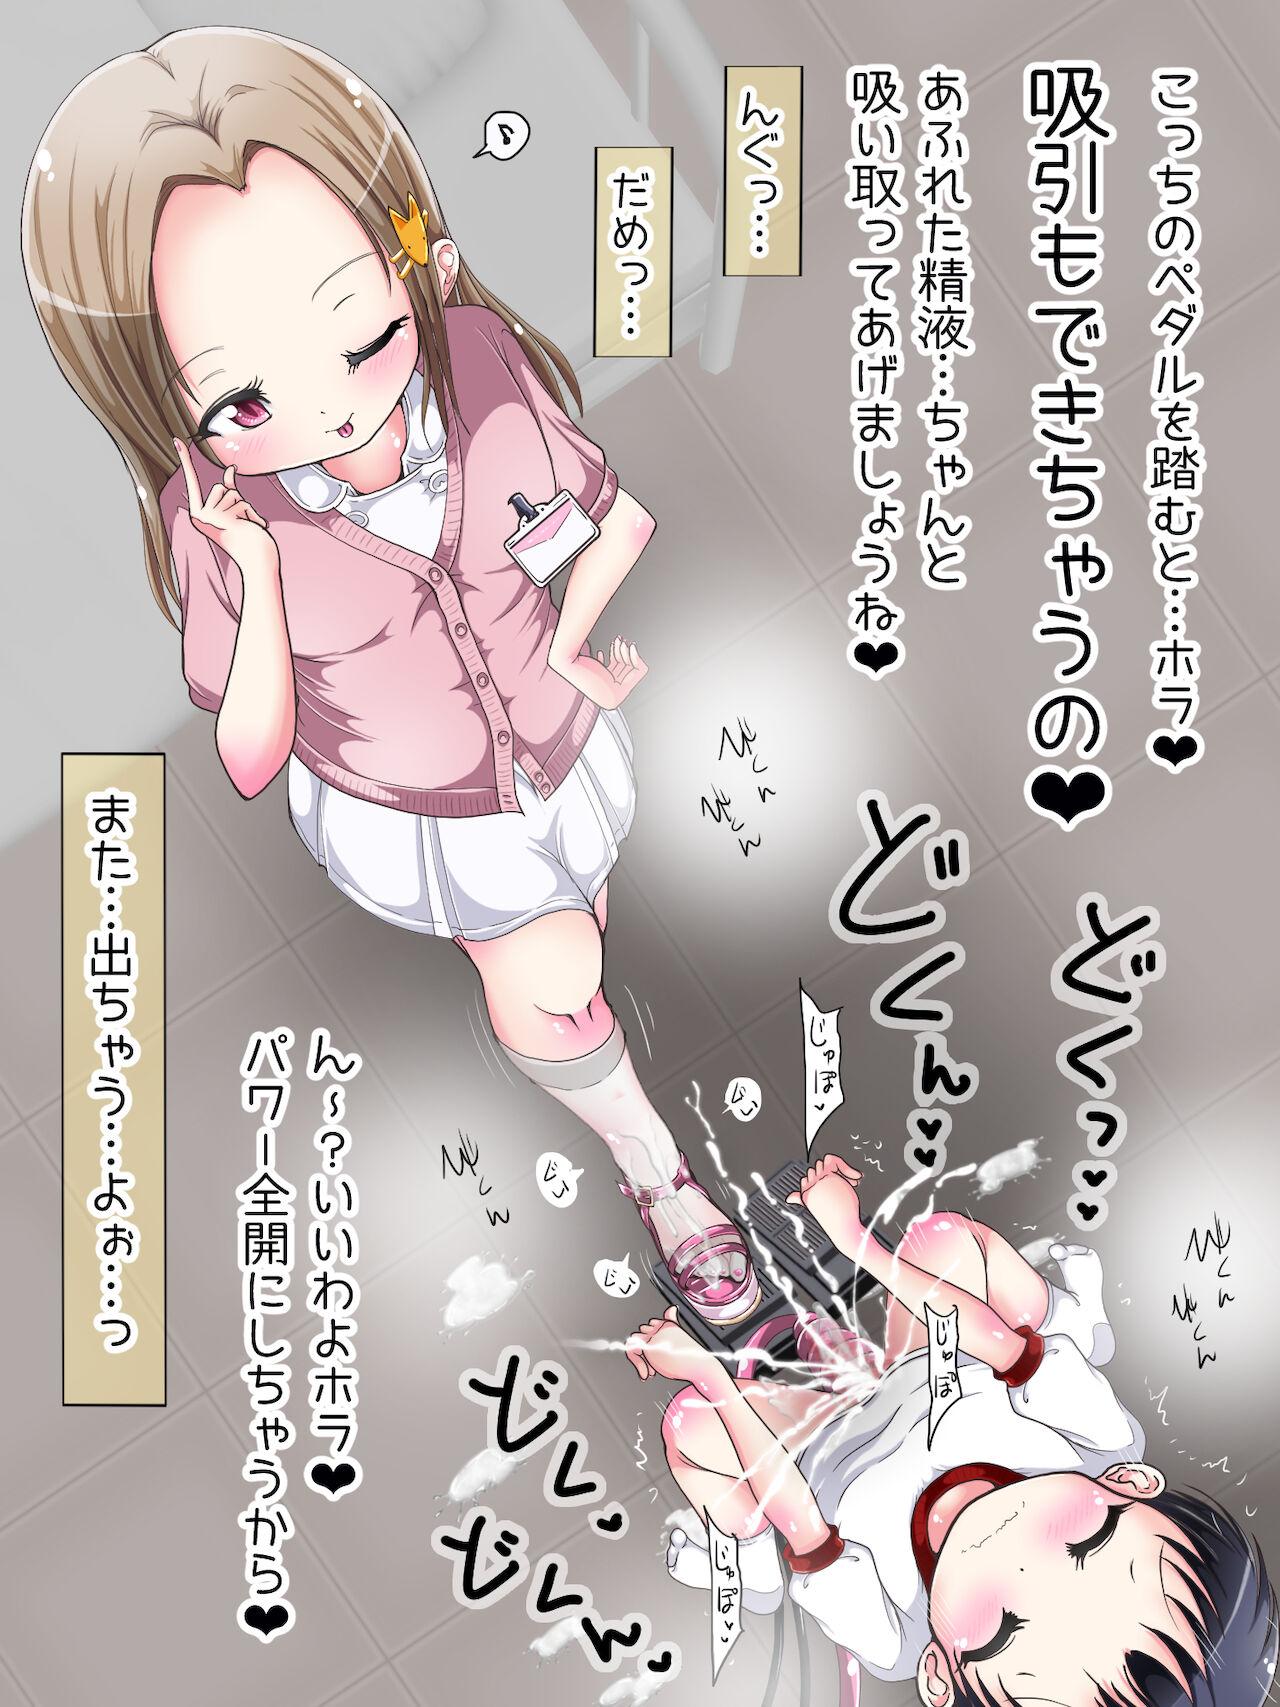 [Oneashi] One-Shota Footjob Lessons: Foot-Stroked by Nurses 148